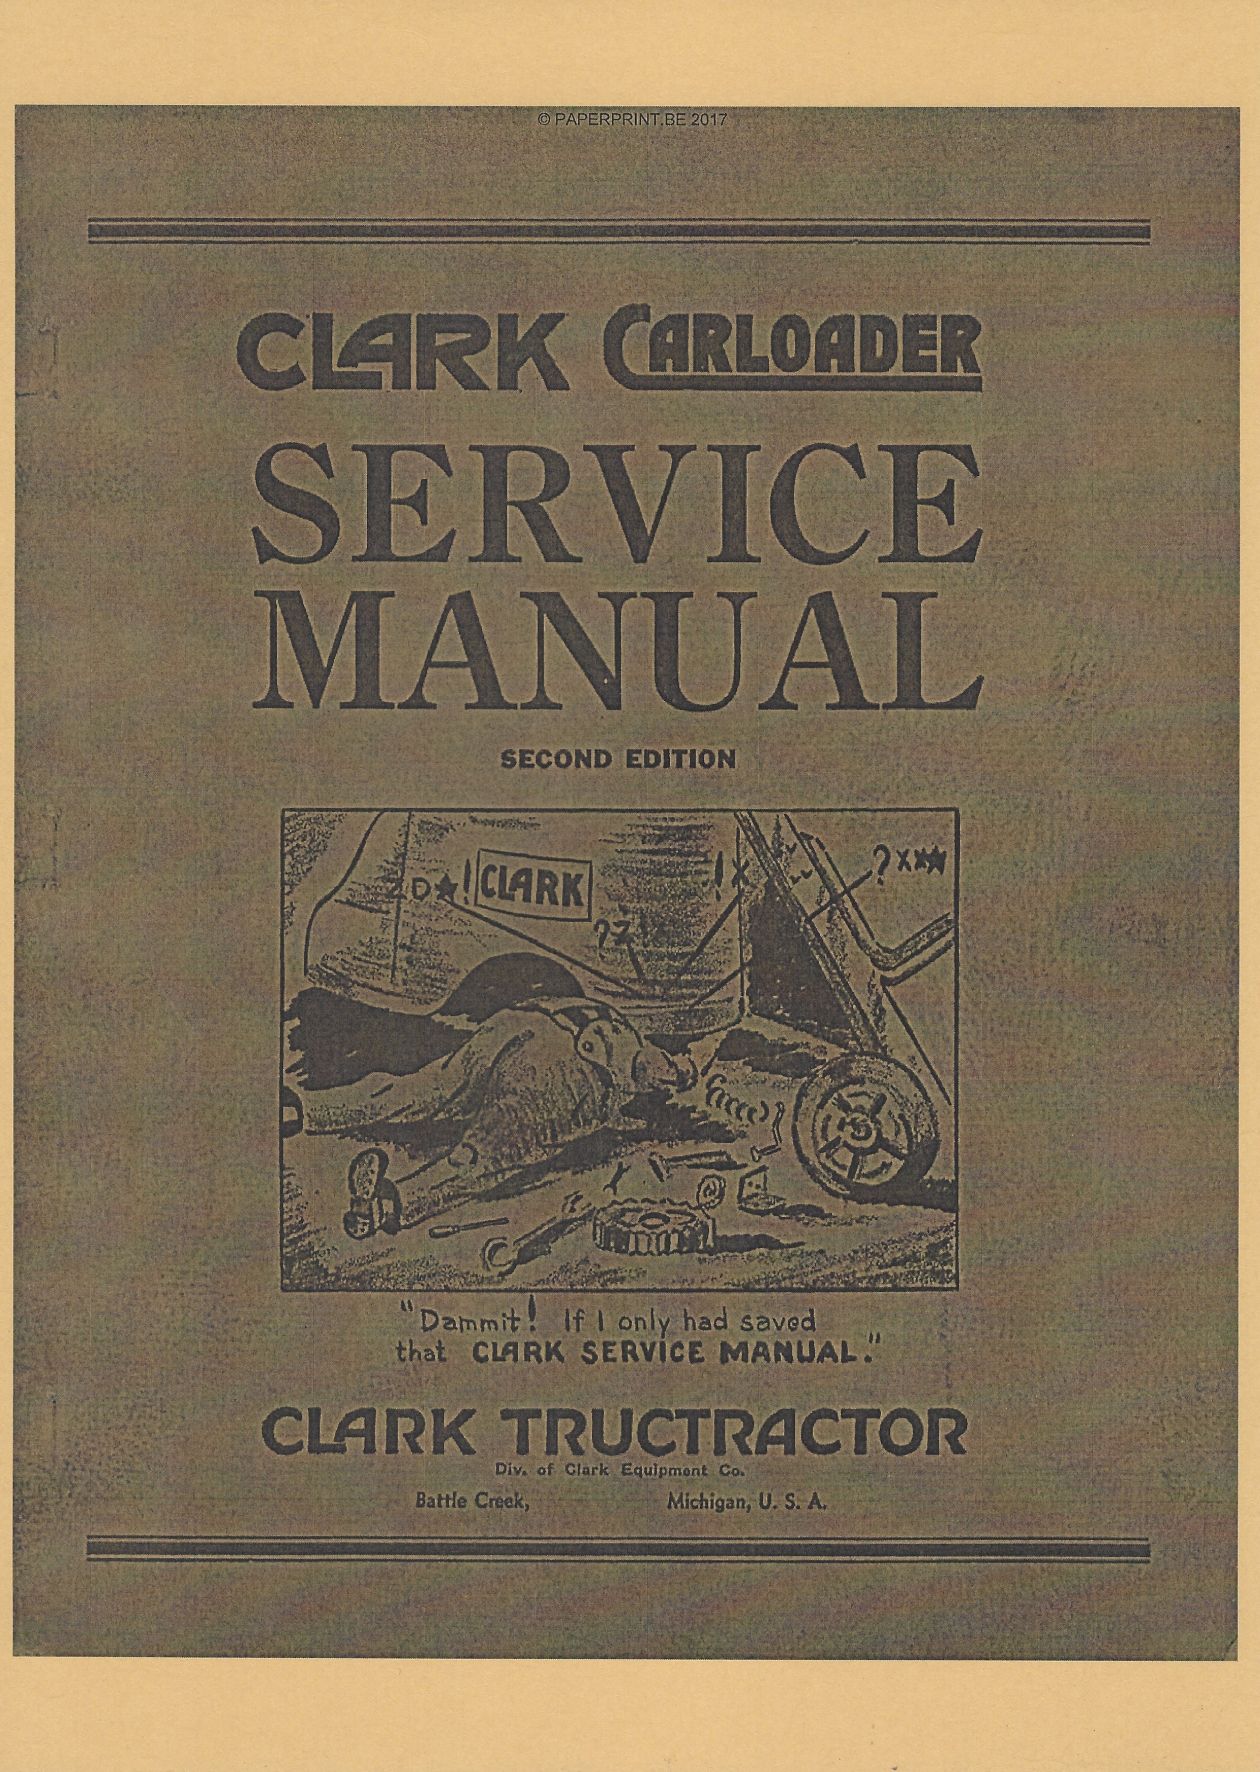 CLARK CARLOADER SERVICE MANUAL